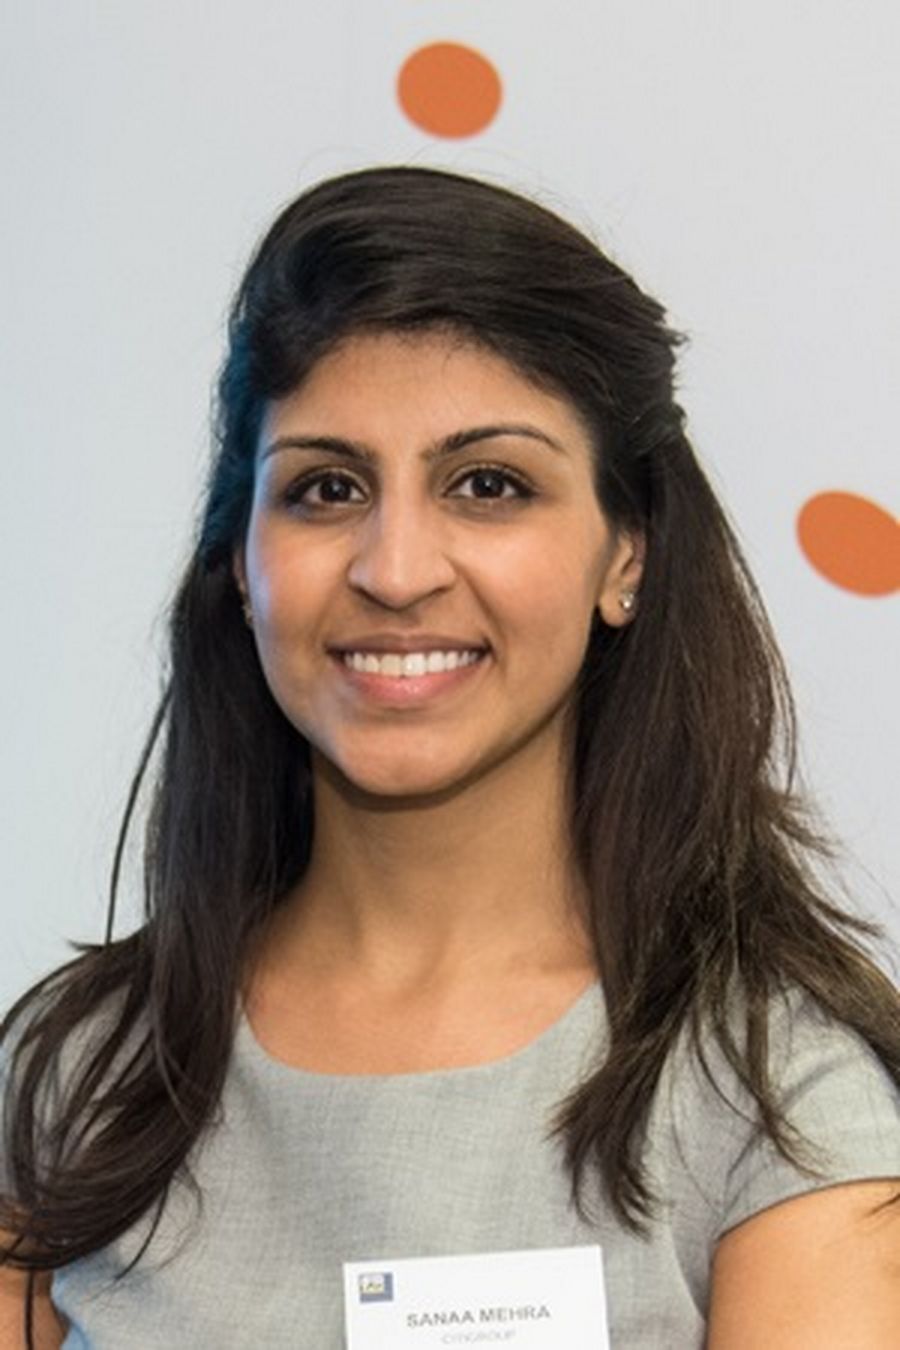 Sanaa Mehra